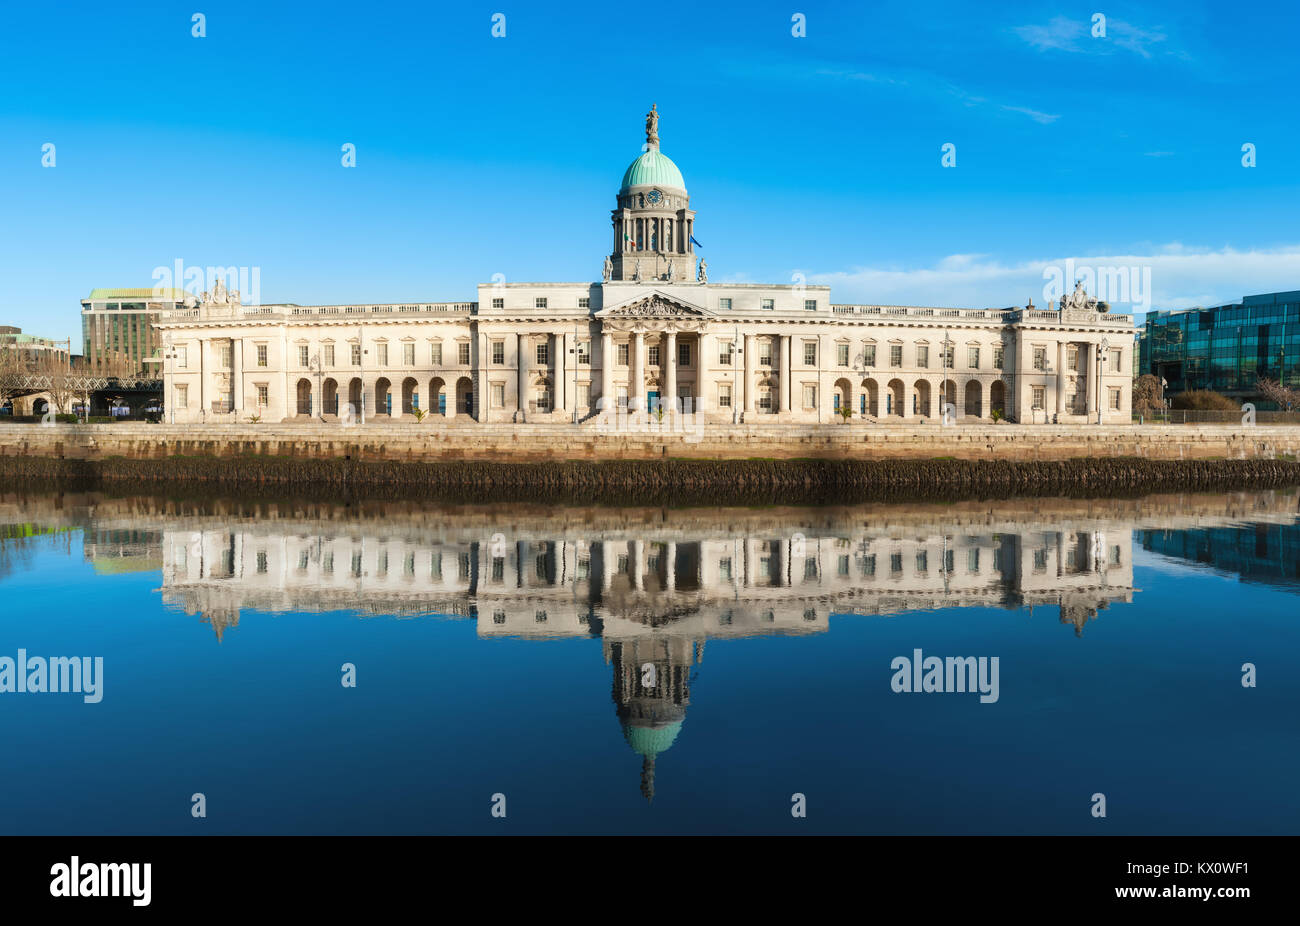 Customs House, historical landmark on the River Liffey in Dublin, Ireland, panoramic image Stock Photo